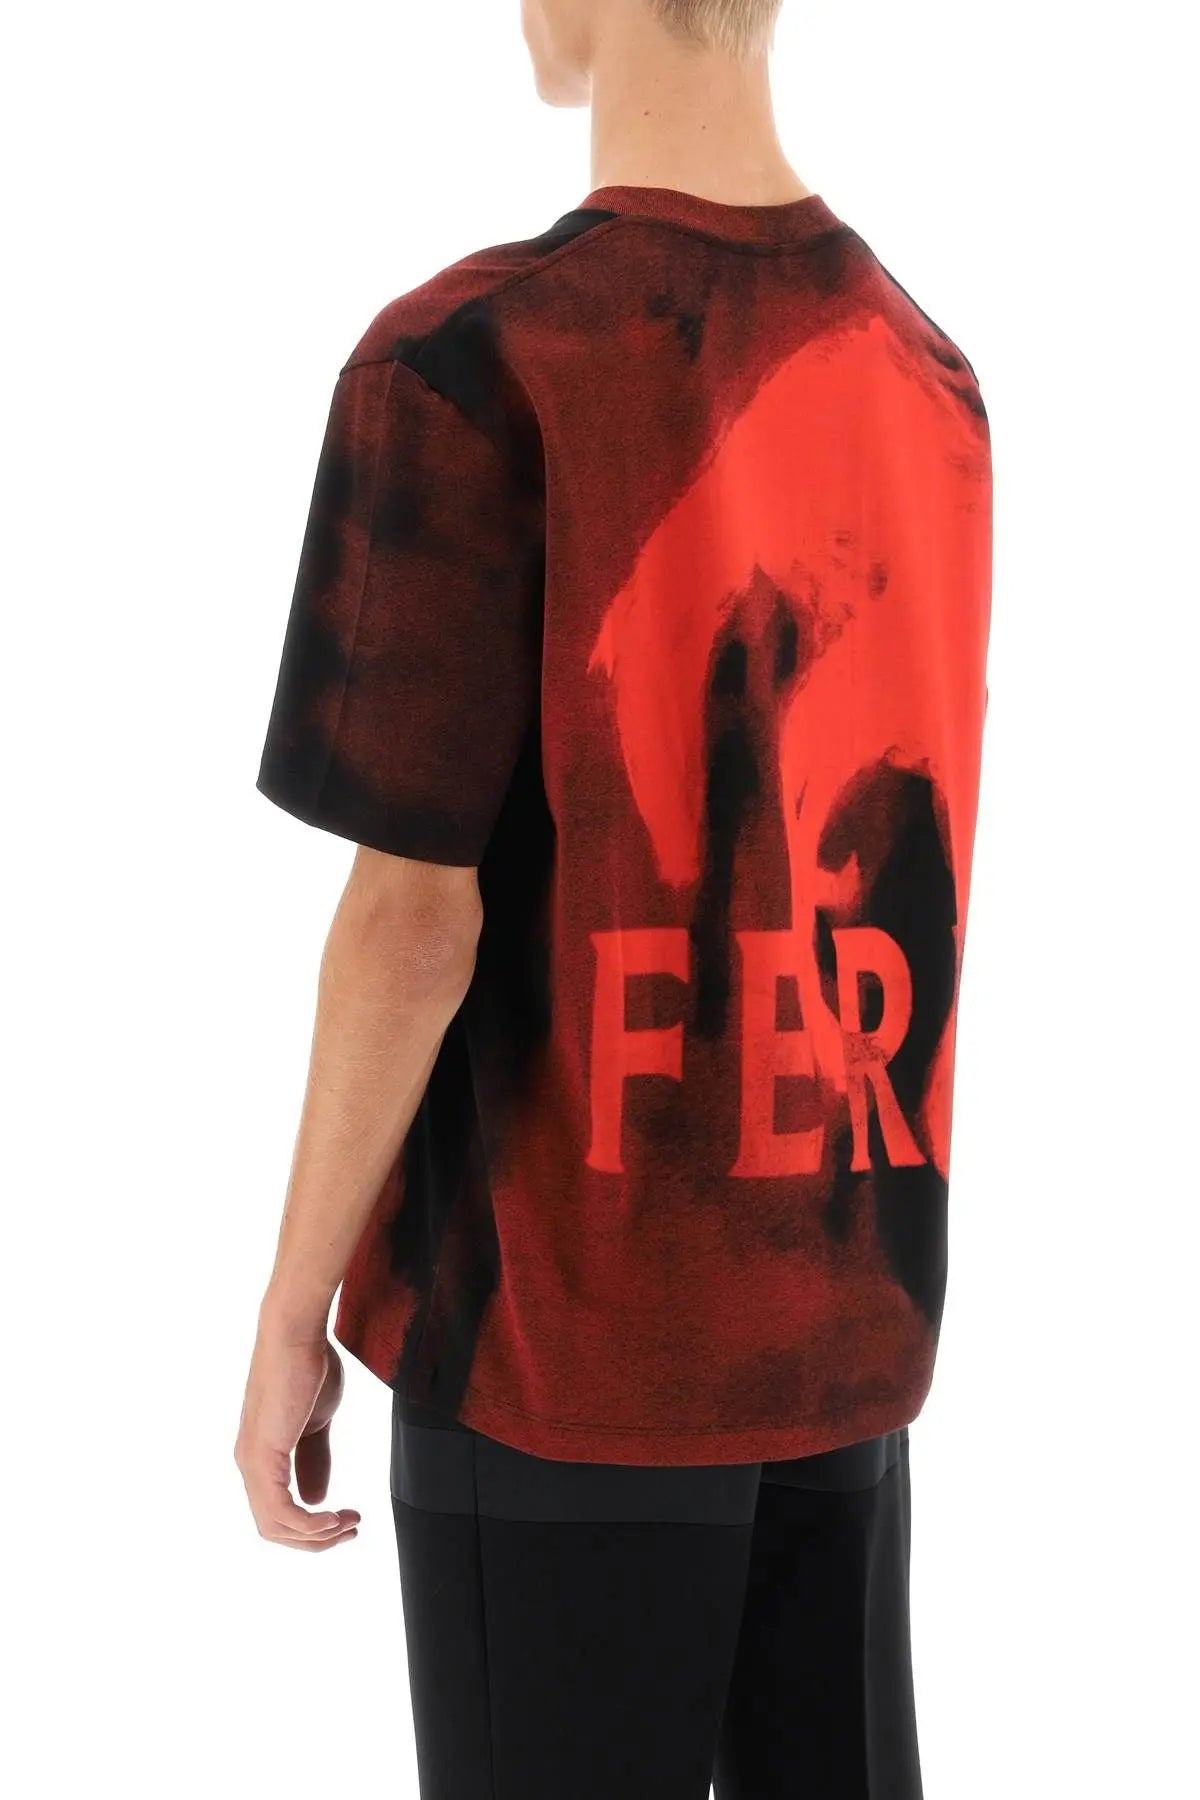 Salvatore Ferragamo Red Mustang Print T-Shirt